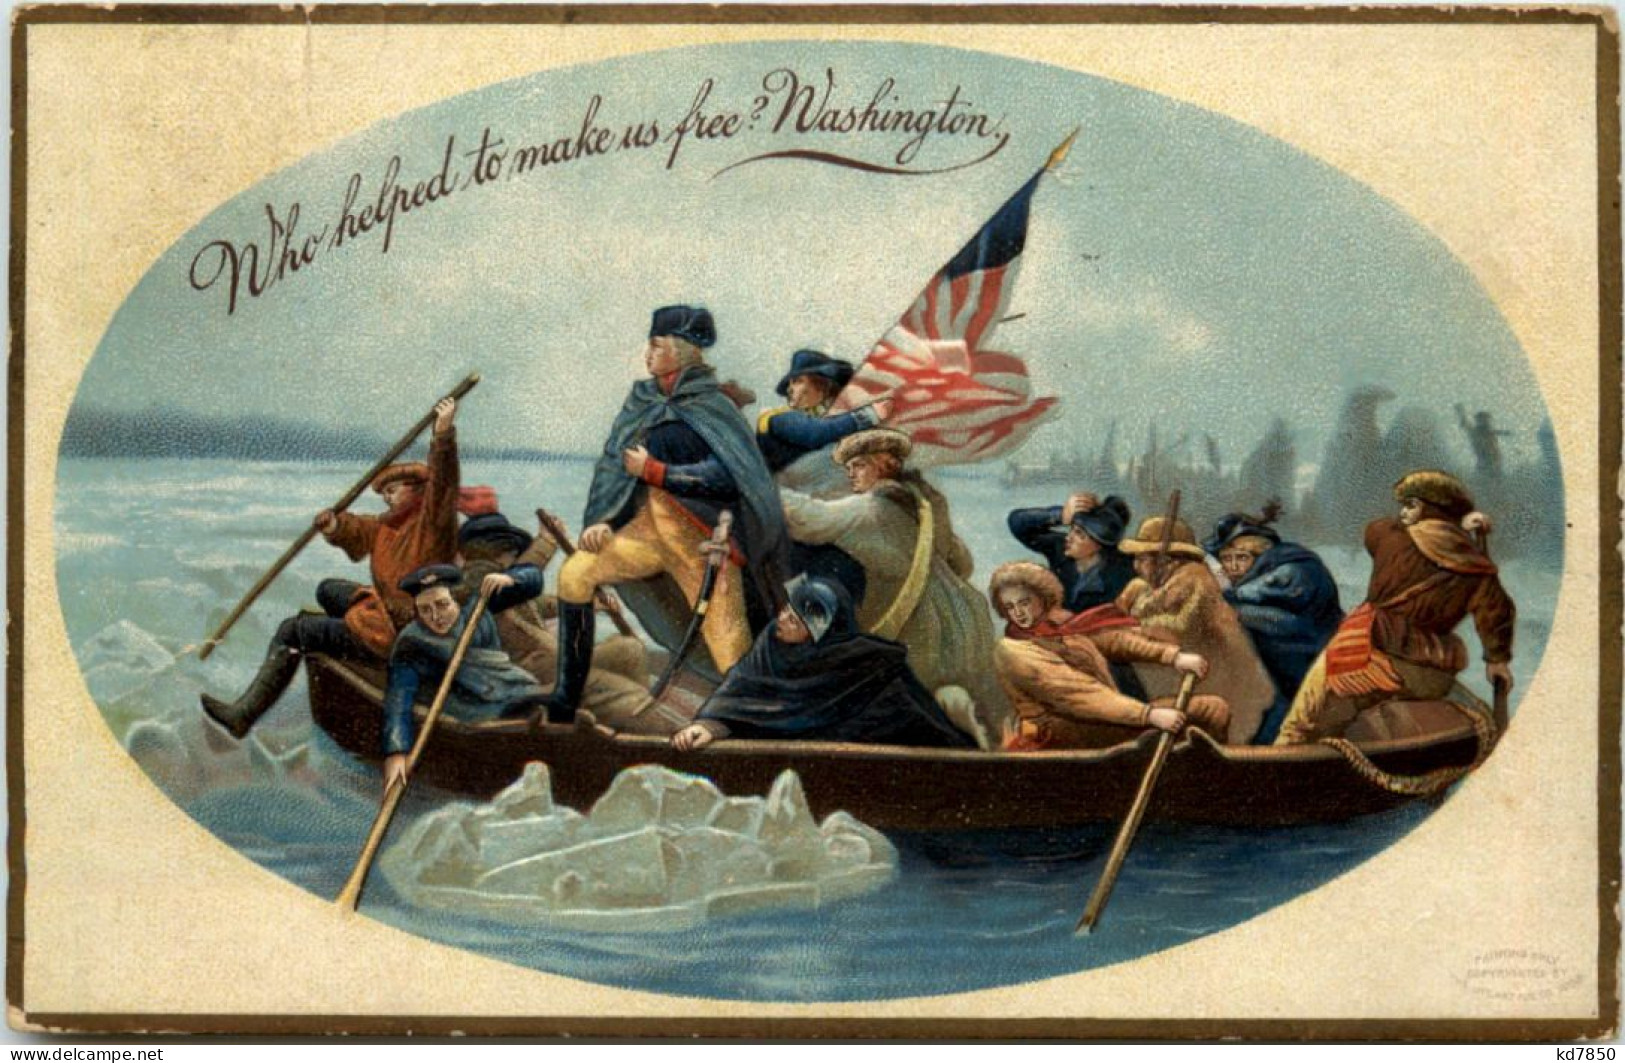 George Washington - Who Helped To Make Us Free? - Presidenten